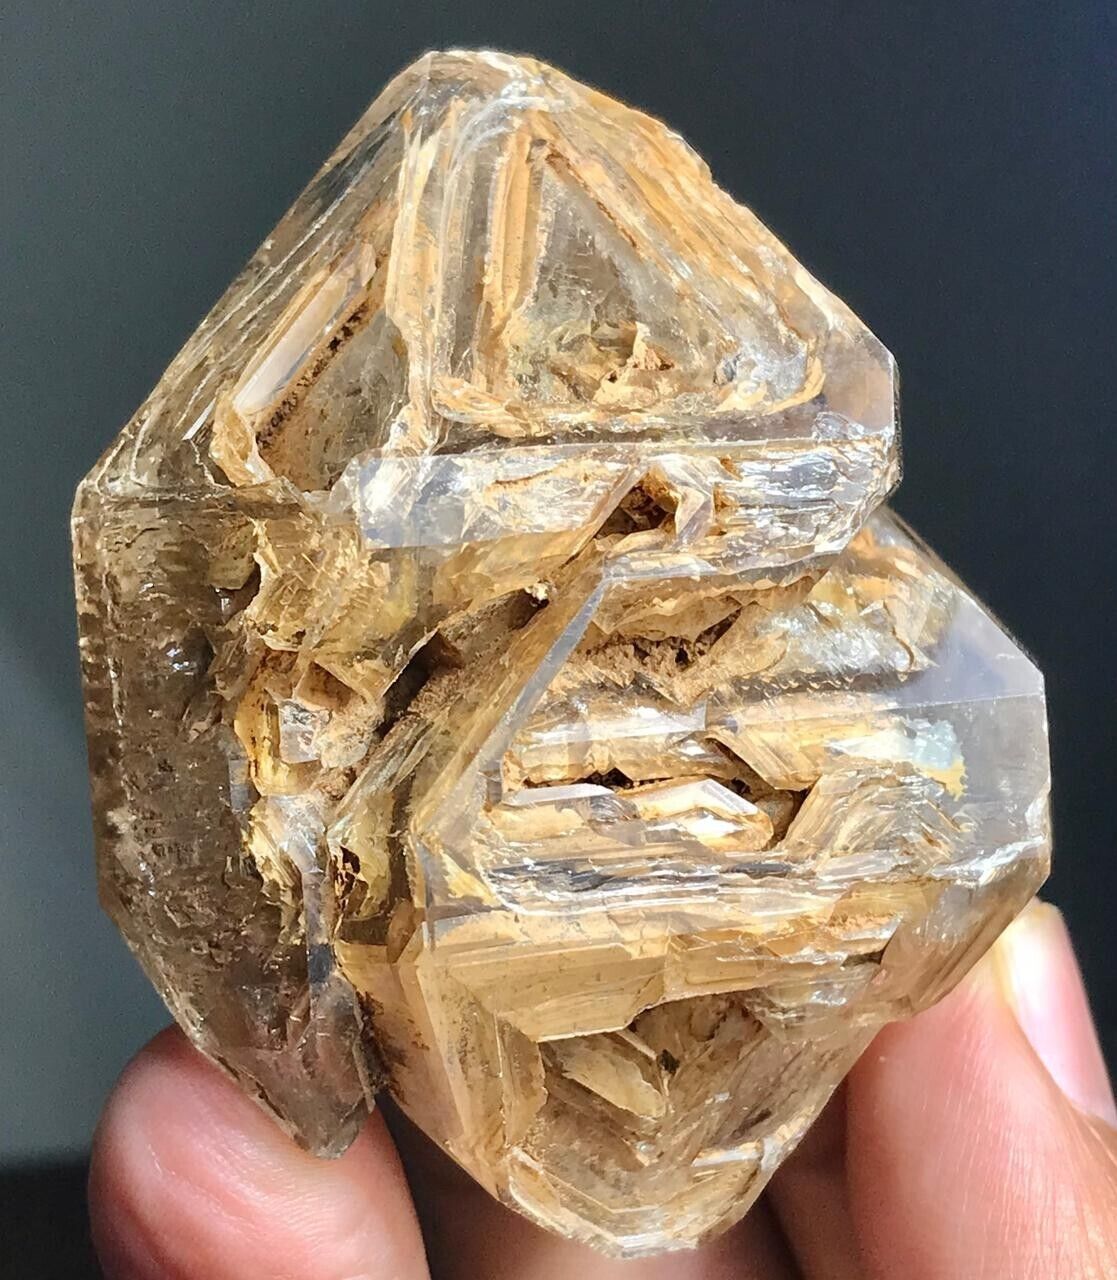 Rare Window Quartz crystal specimen from Pakistan 560 Carats (1)